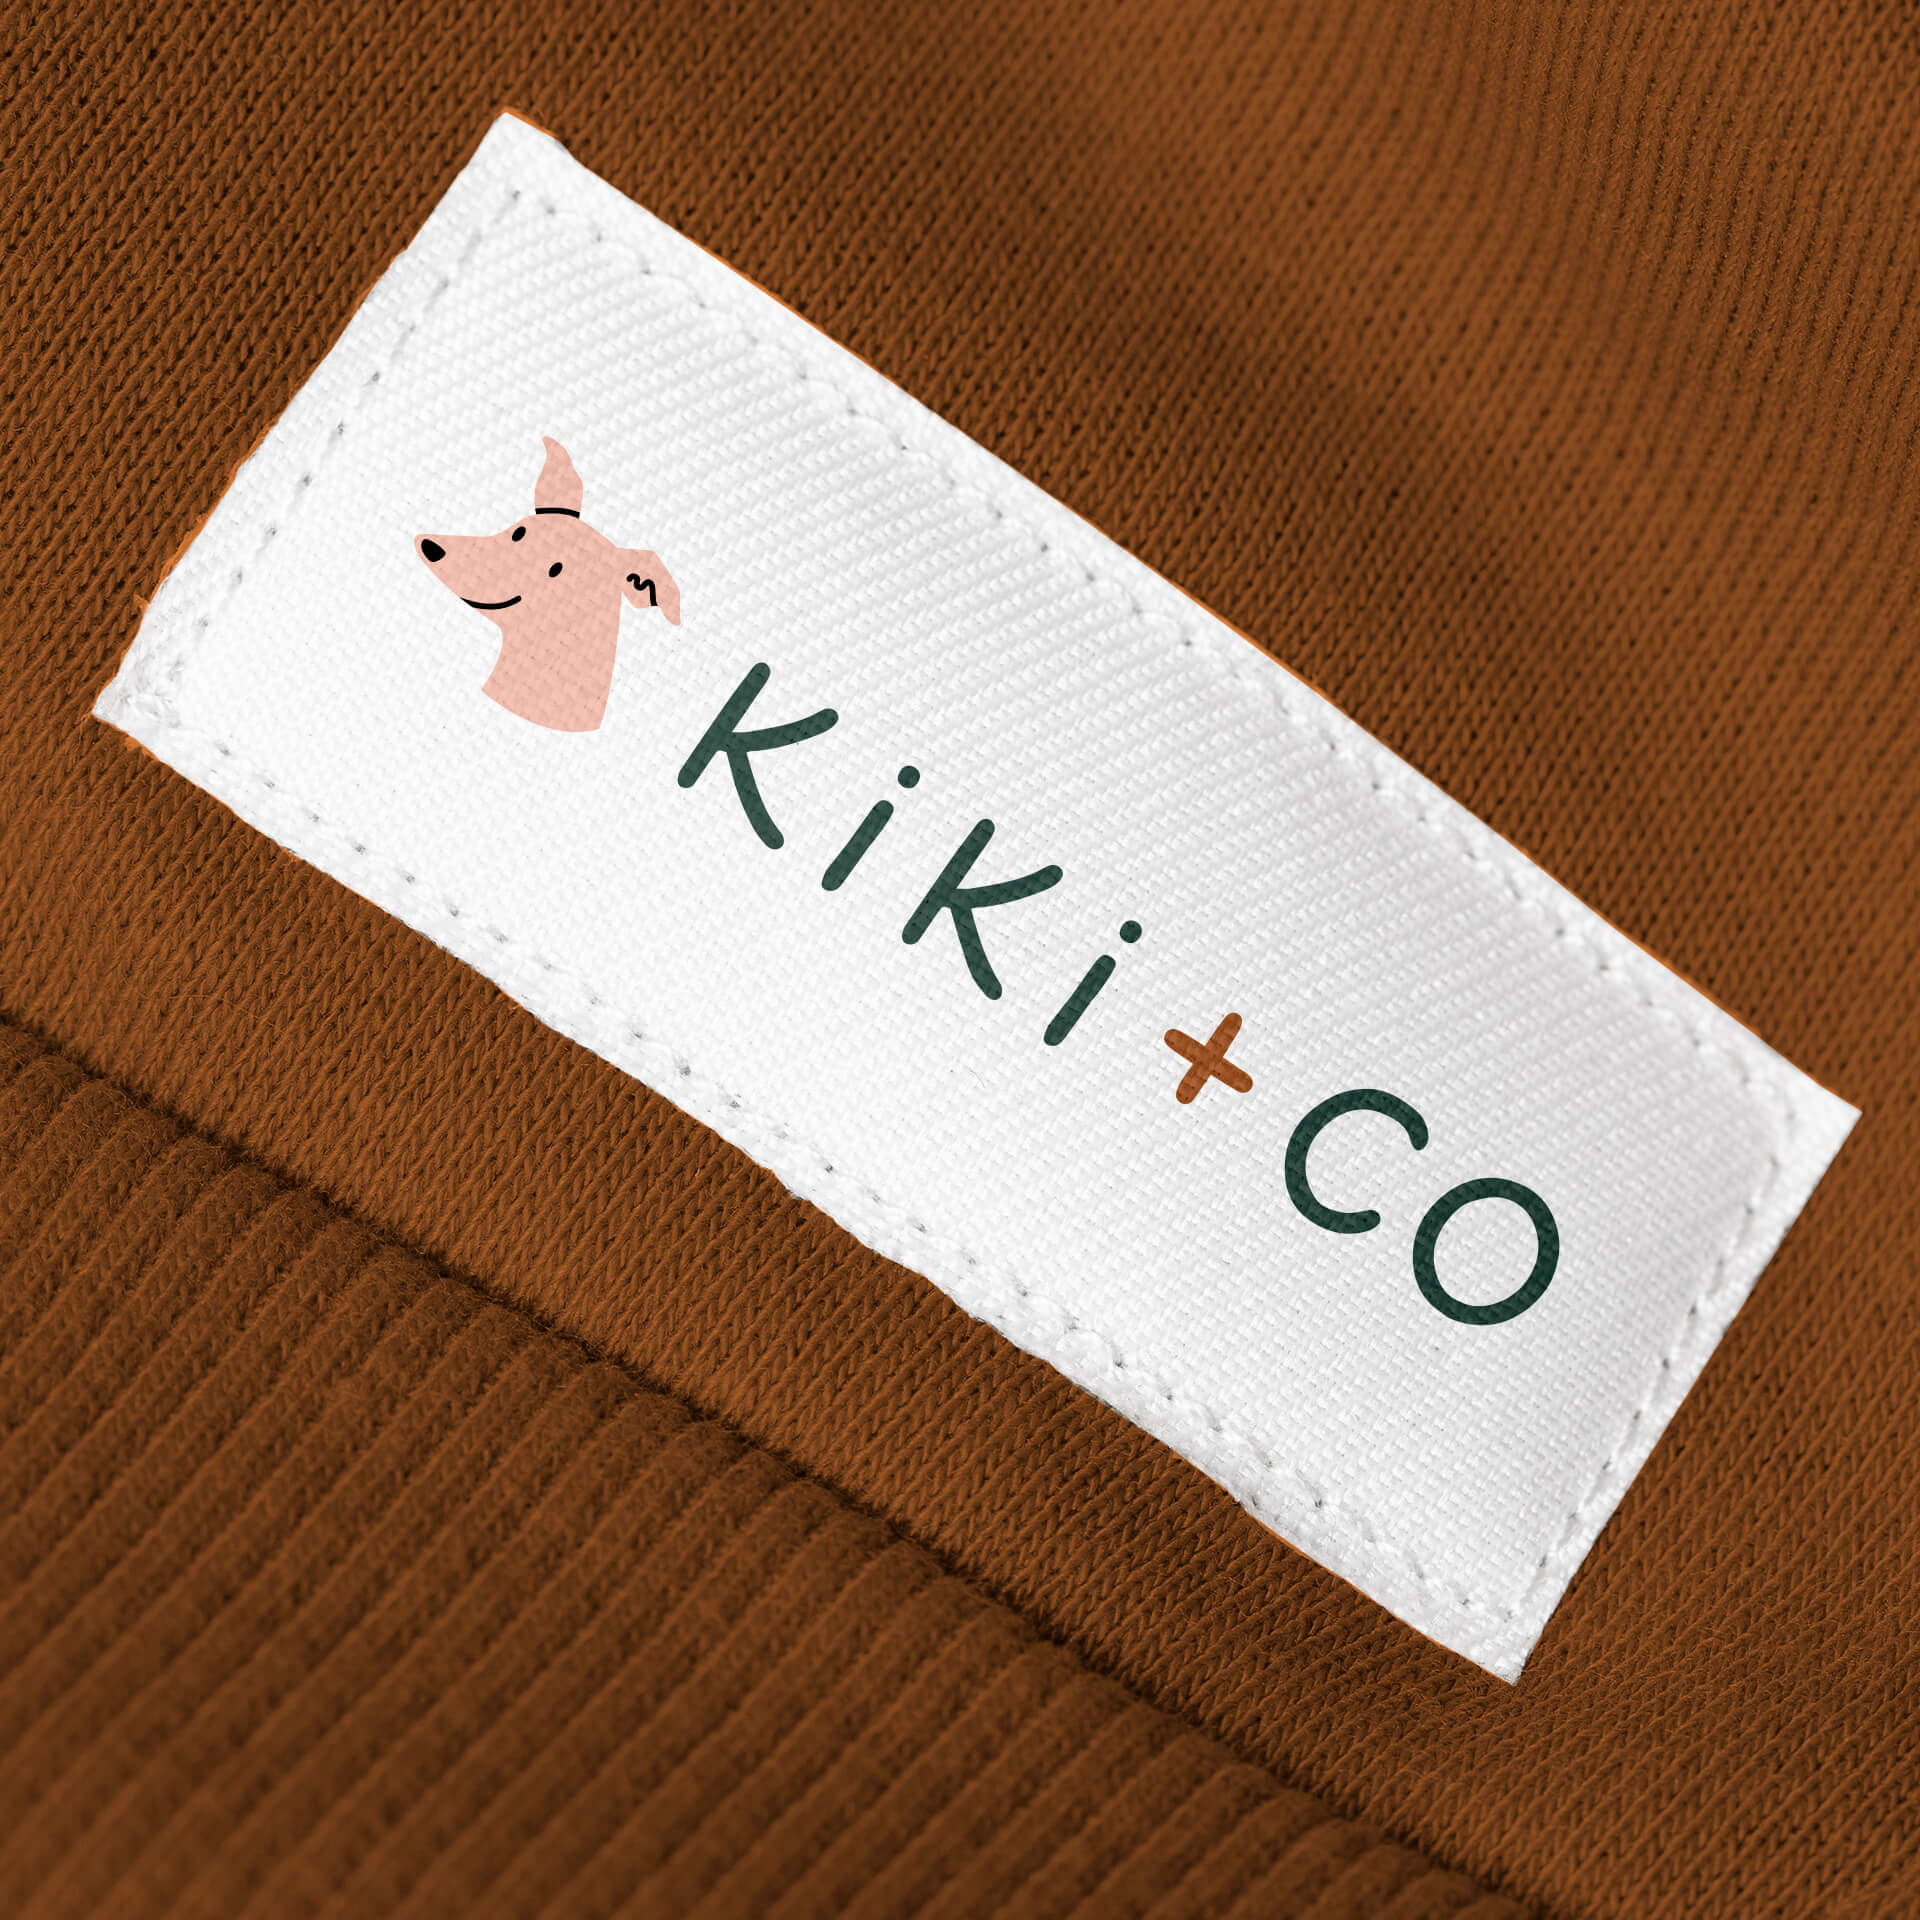 A white clothing label featuring the kiki & co logo on a dark orange garment